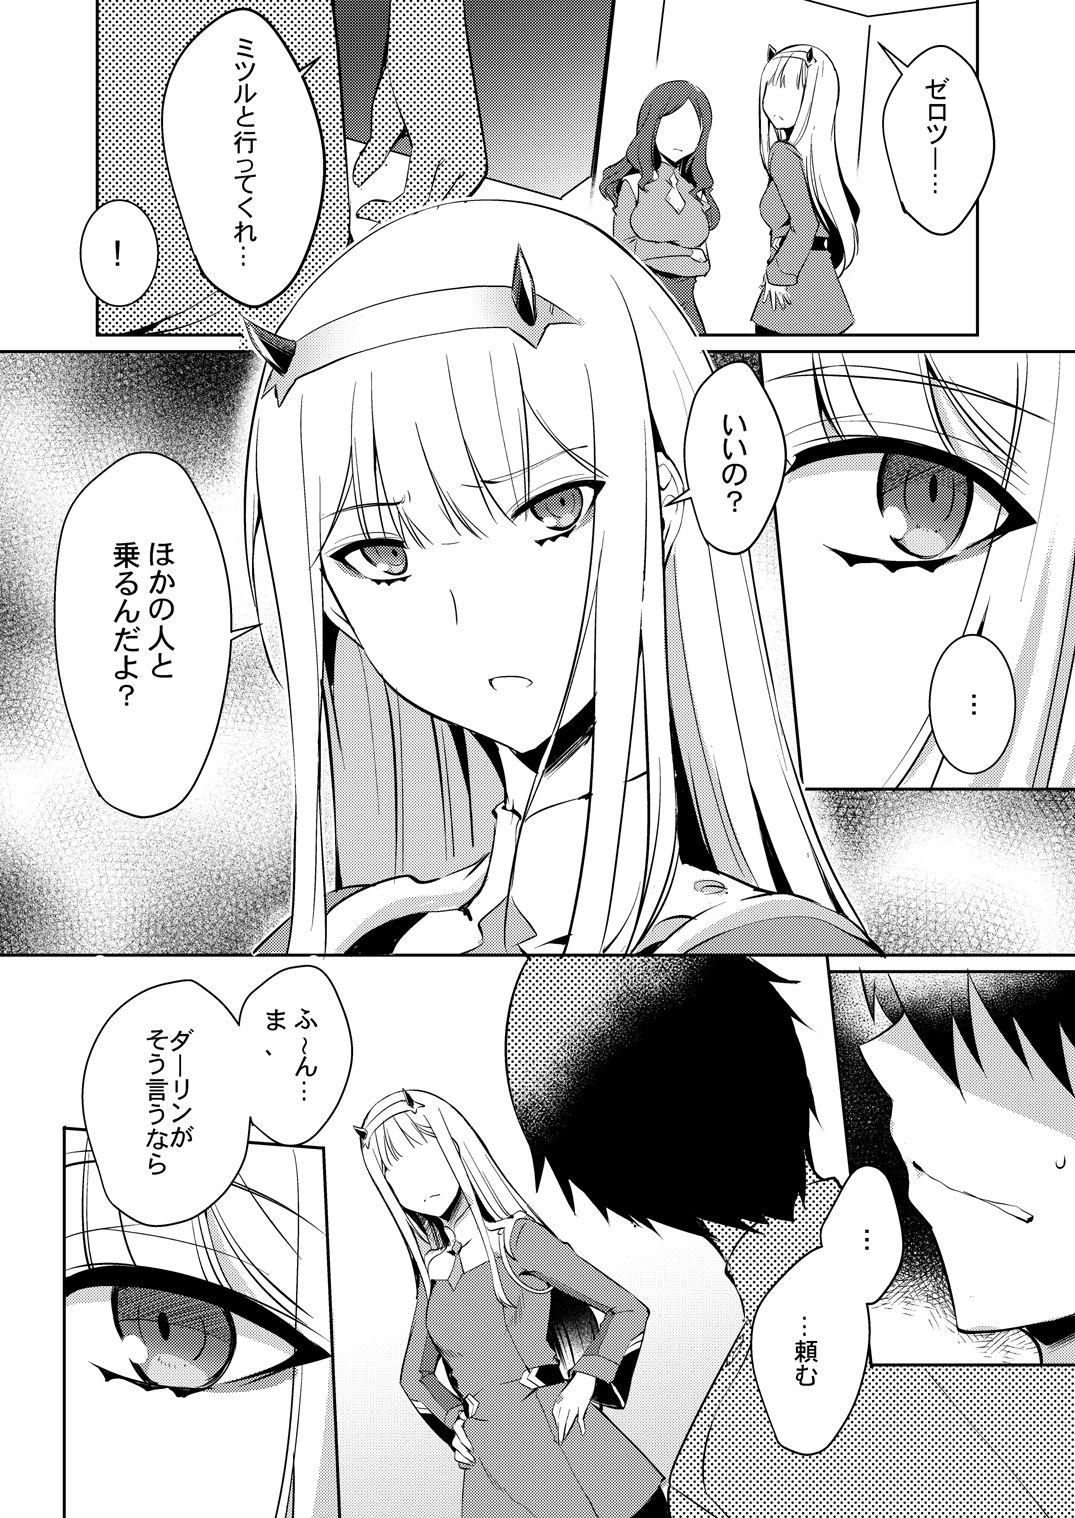 Masturbate Mitsuru in the Zero Two - Darling in the franxx Roughsex - Page 6